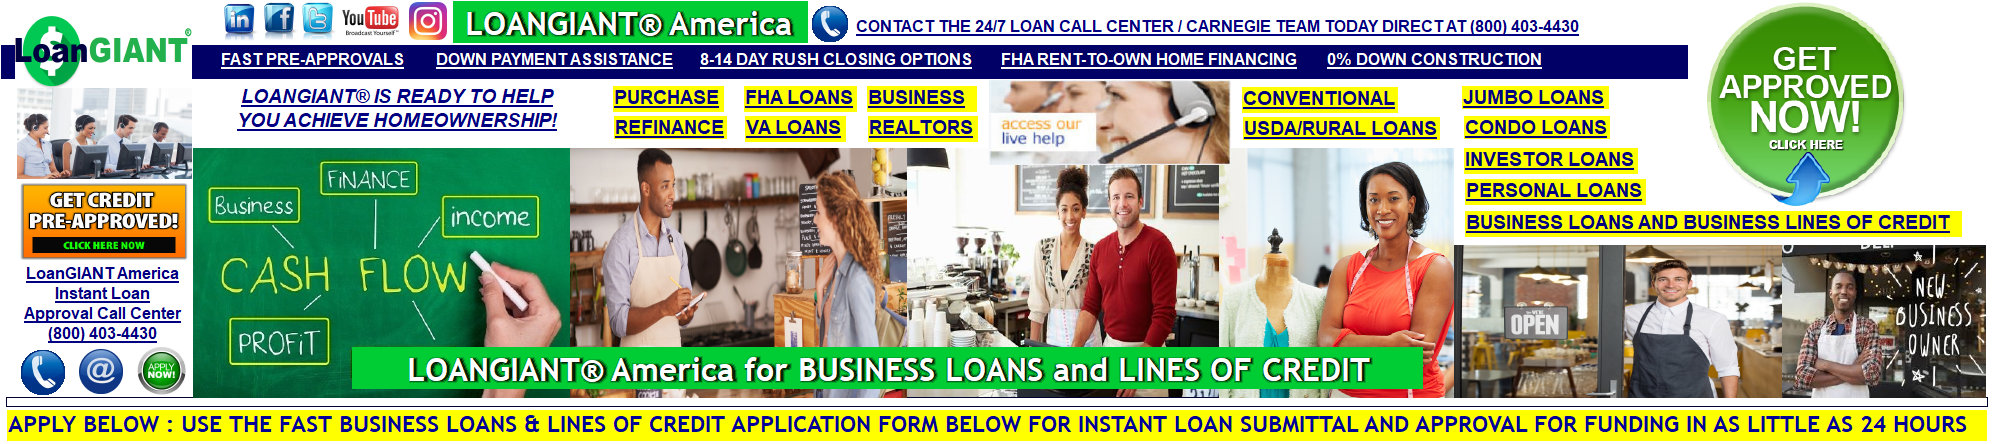 loan_giant_mortgages_loans_money004001.jpg